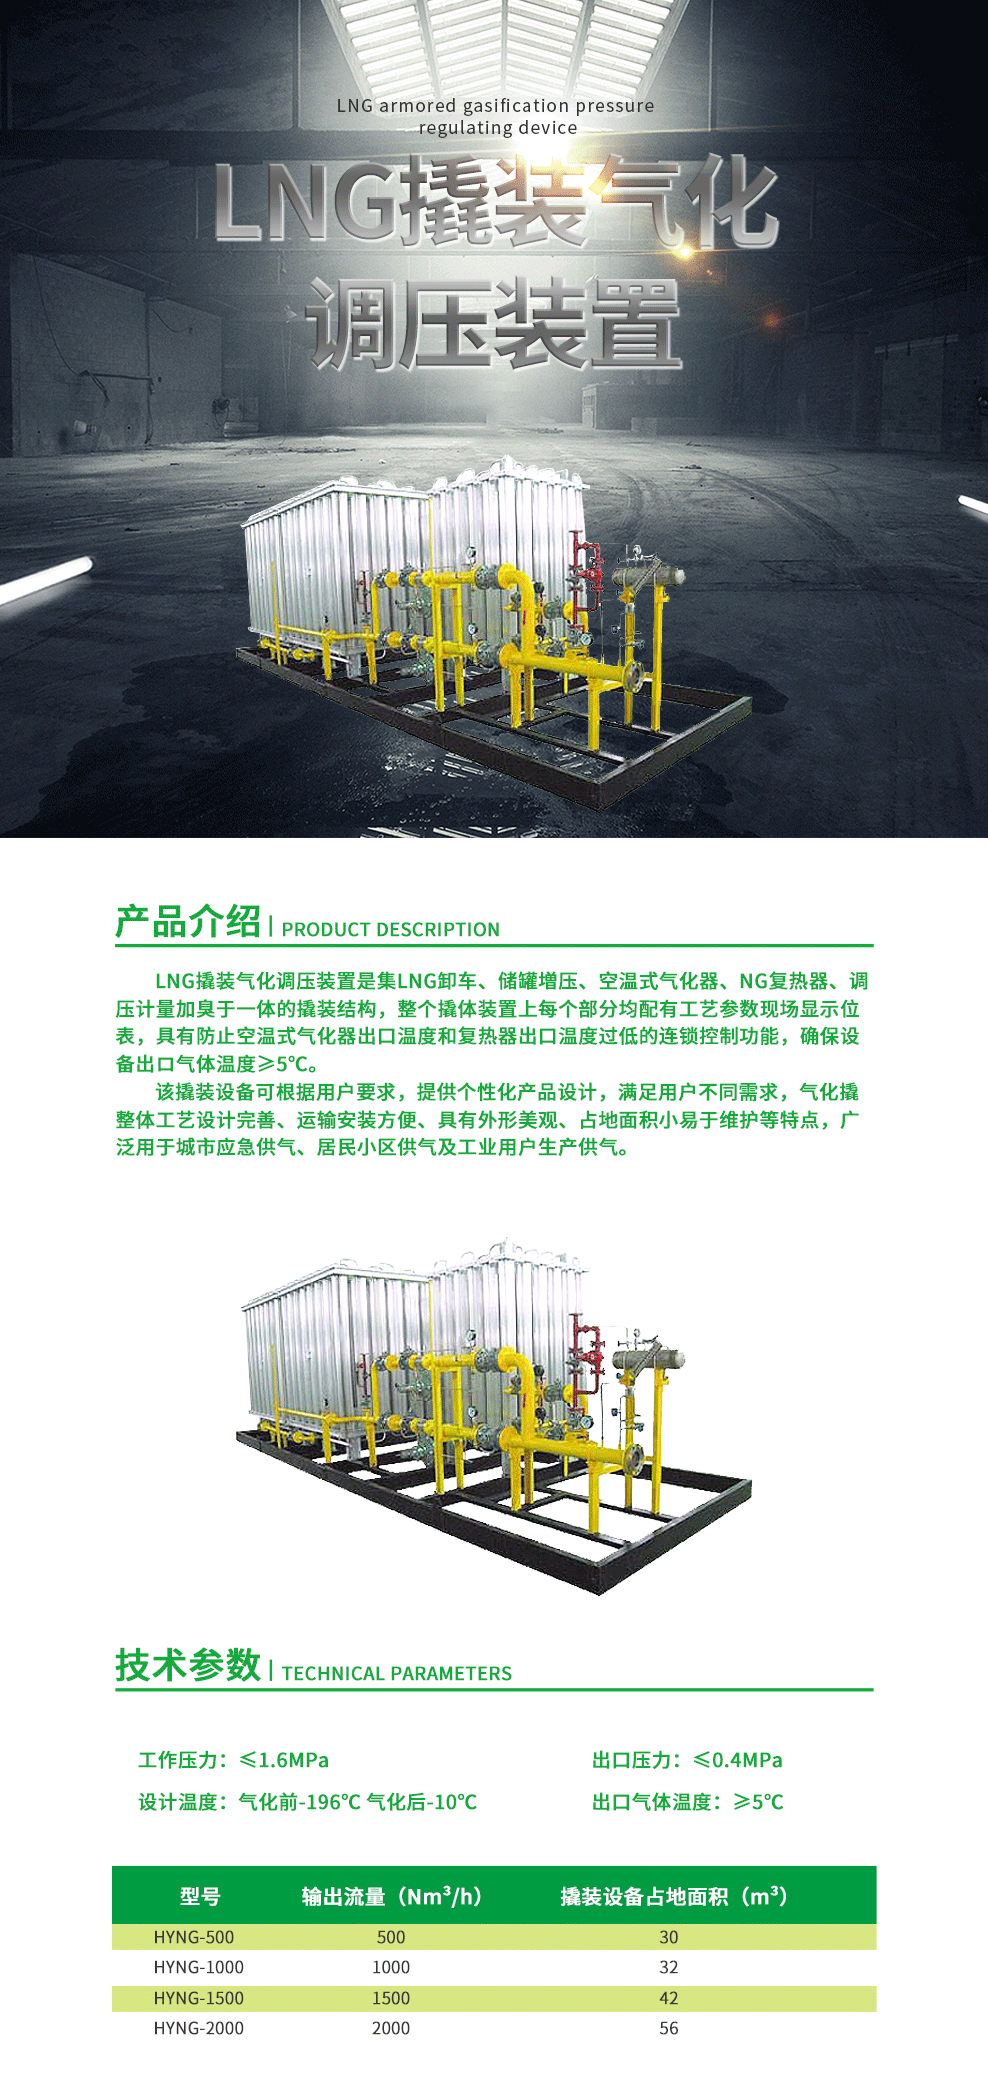 7-LNG撬装气化调压装置.png